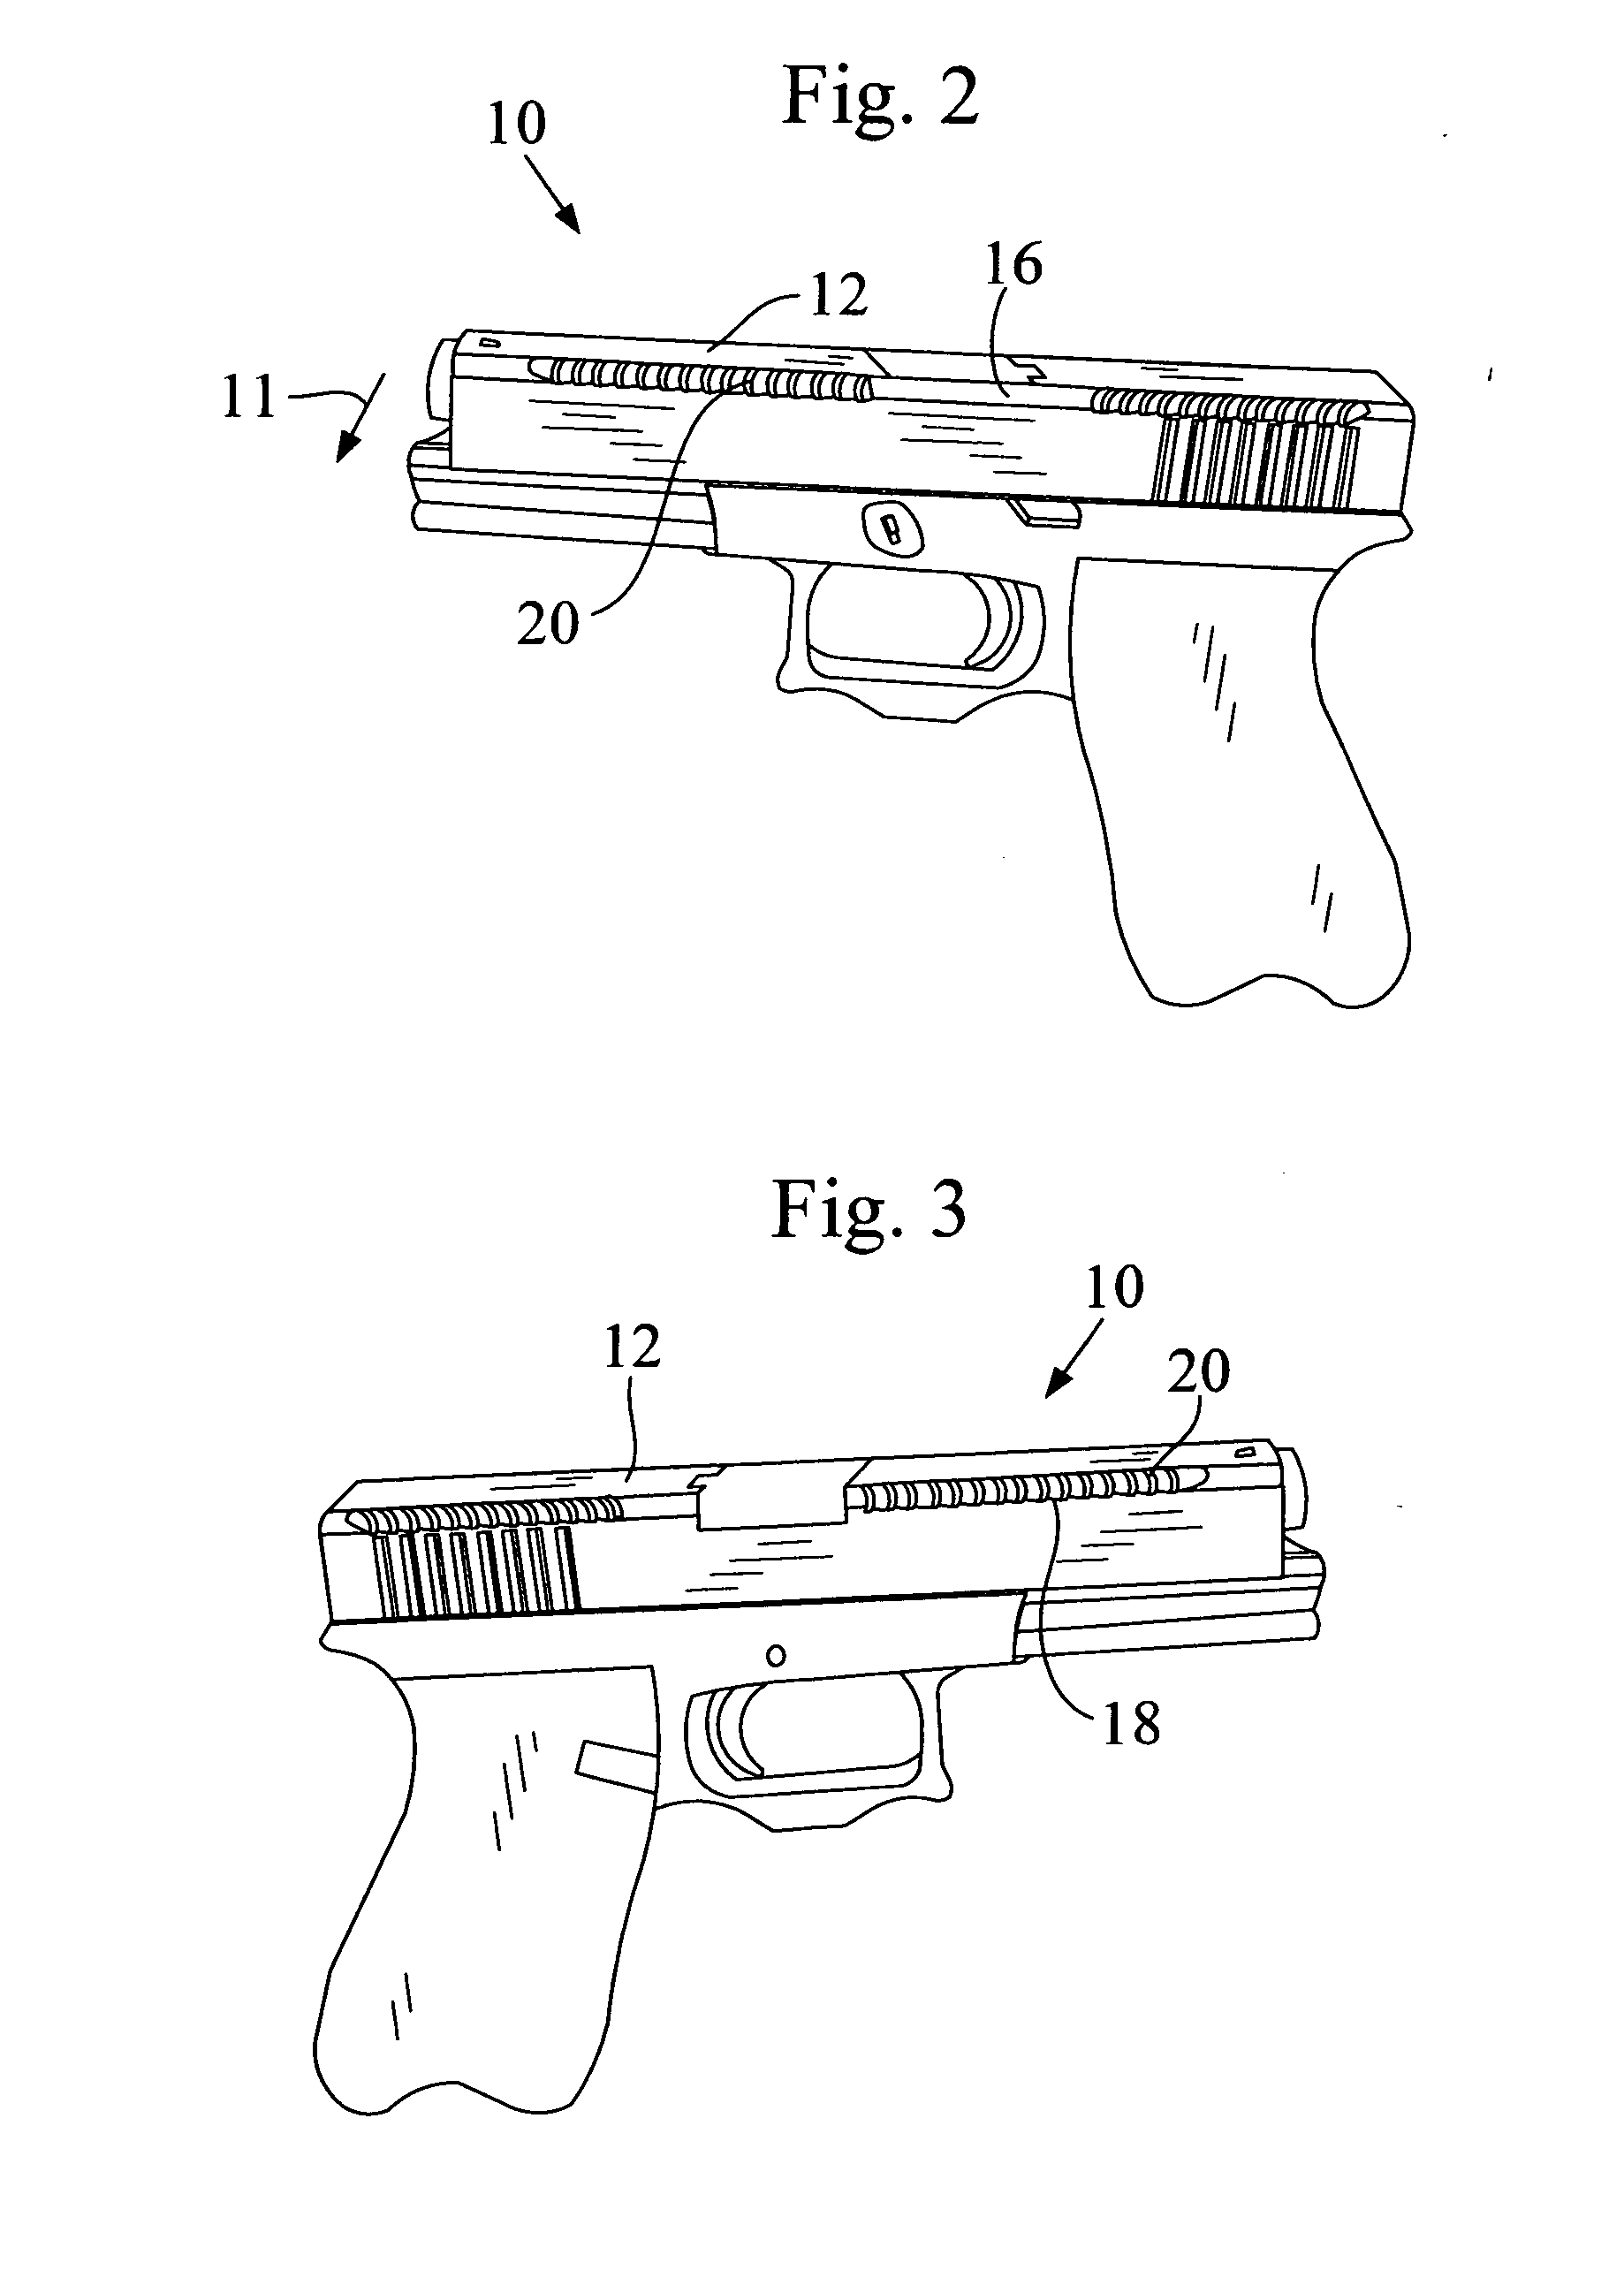 Firearm and a method for loading a firearm